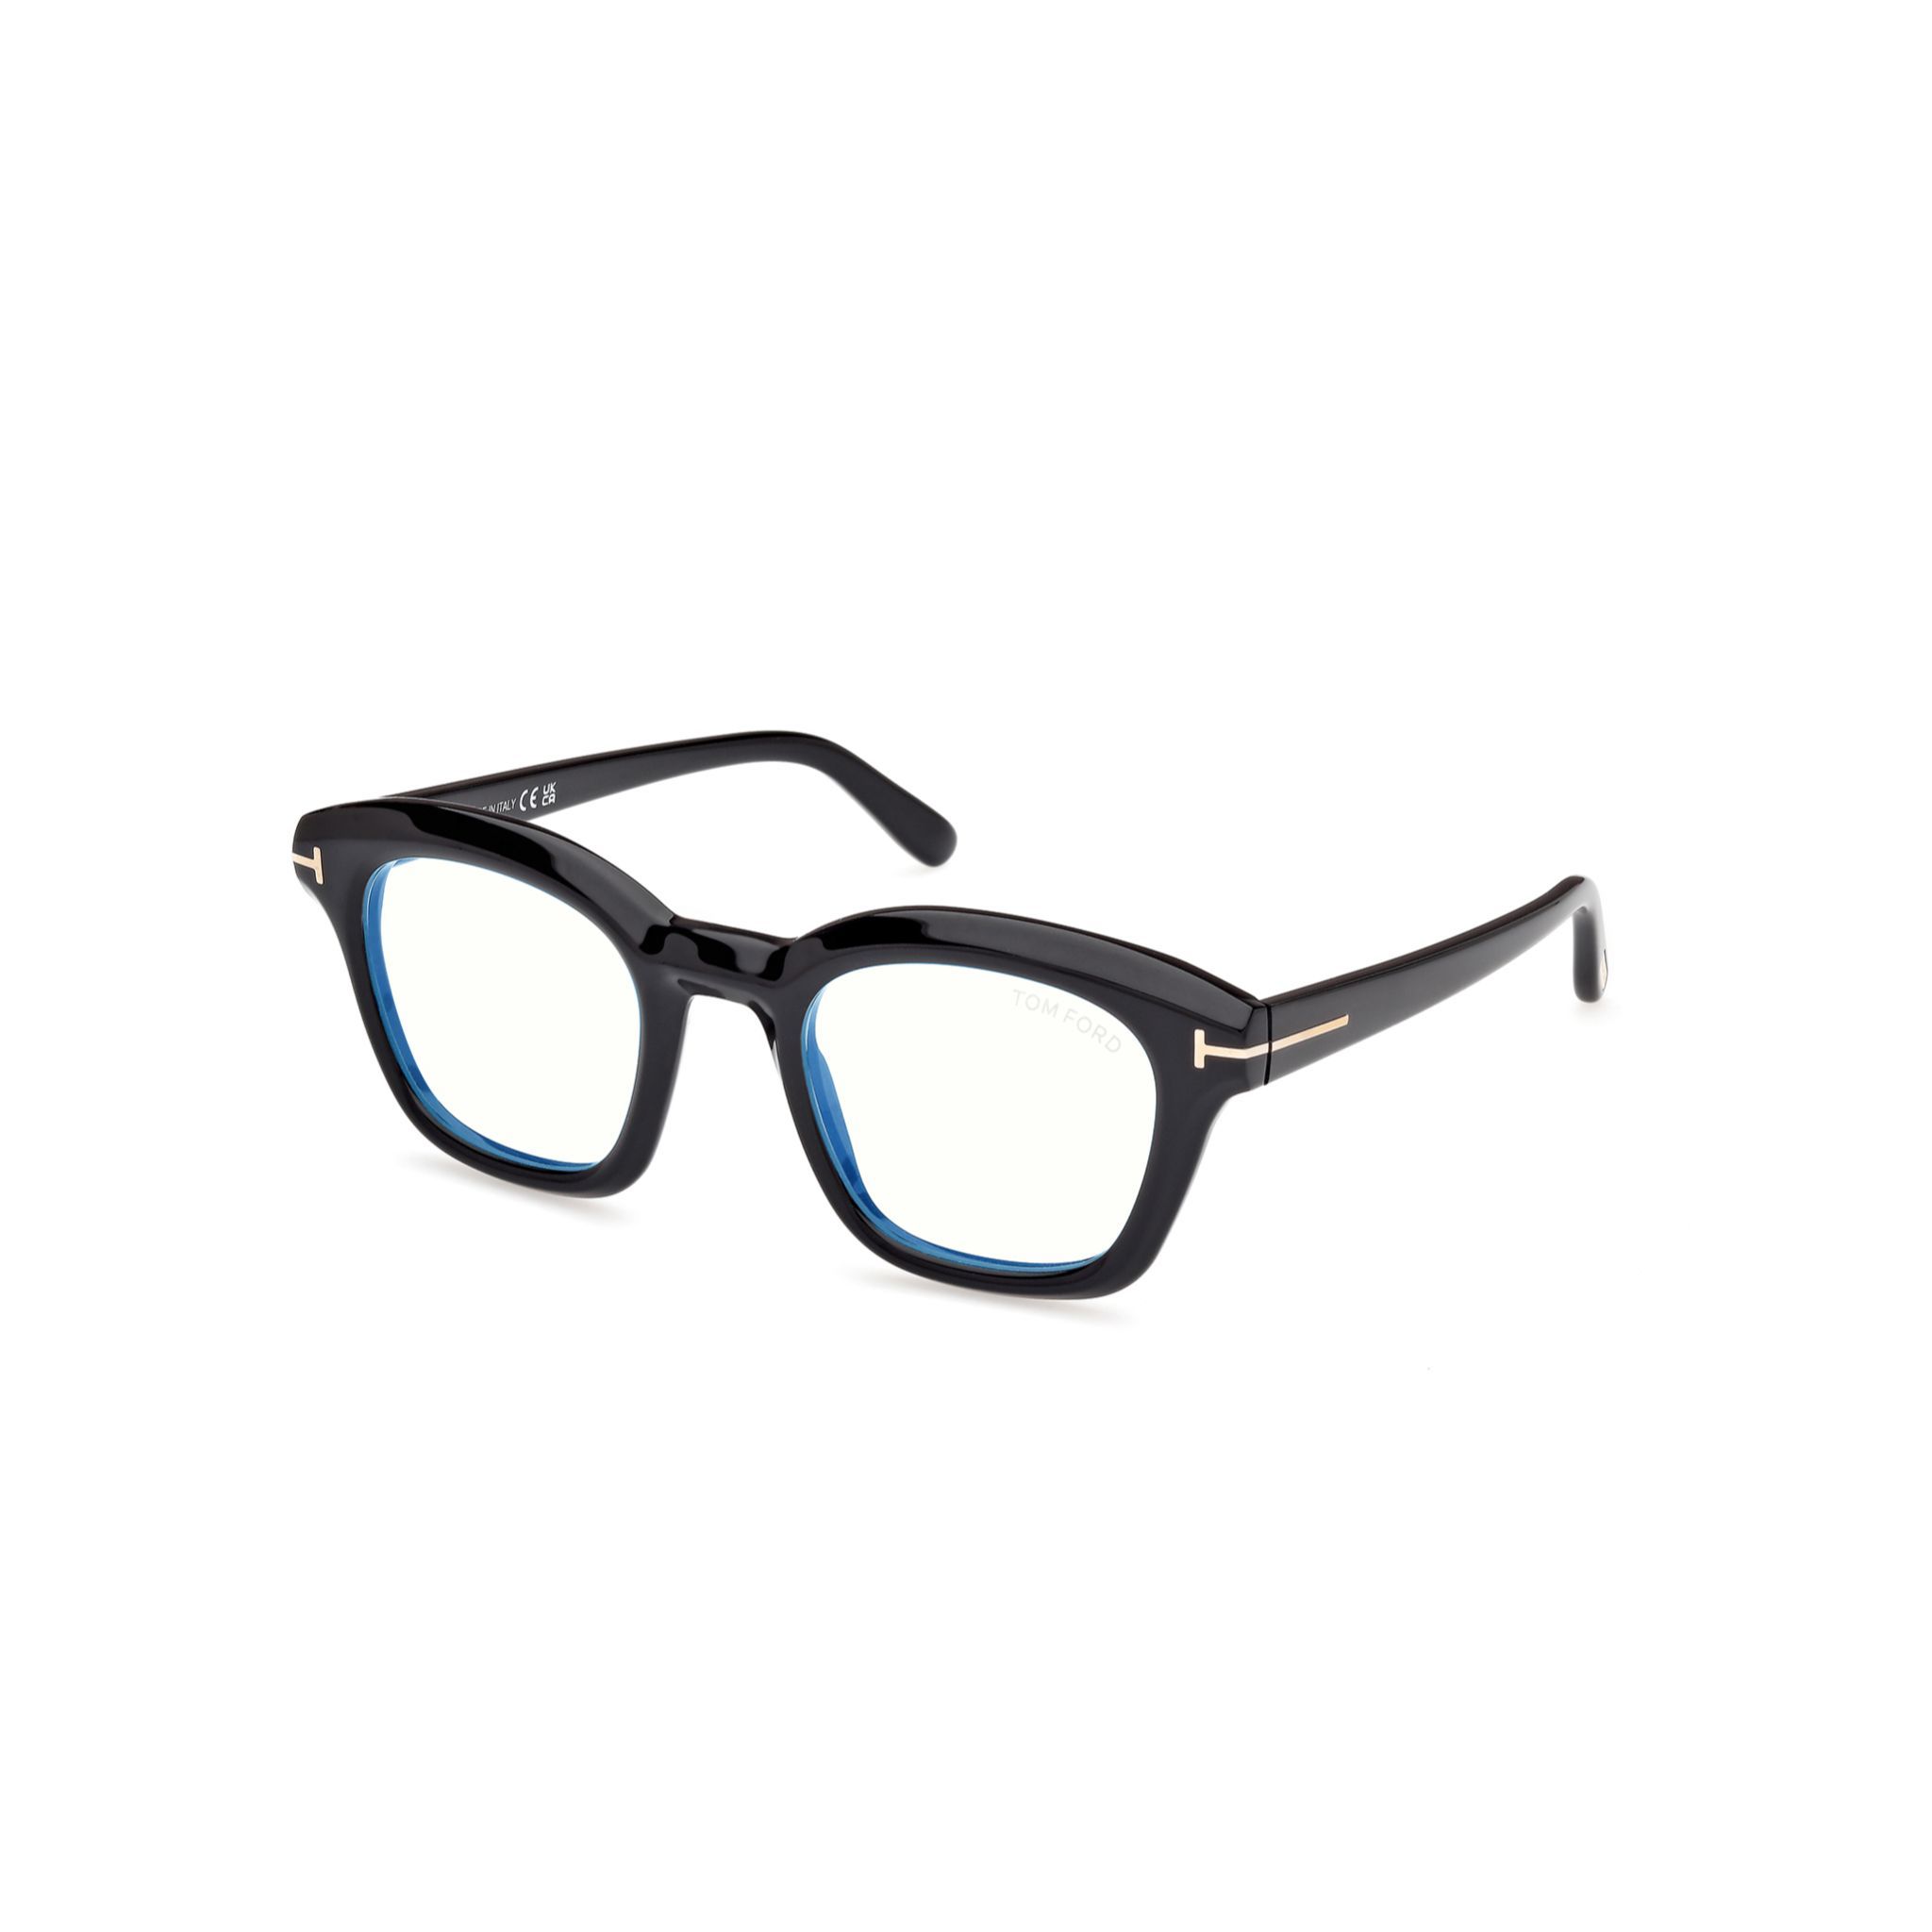 FT5961 Square Eyeglasses B001 - size 49